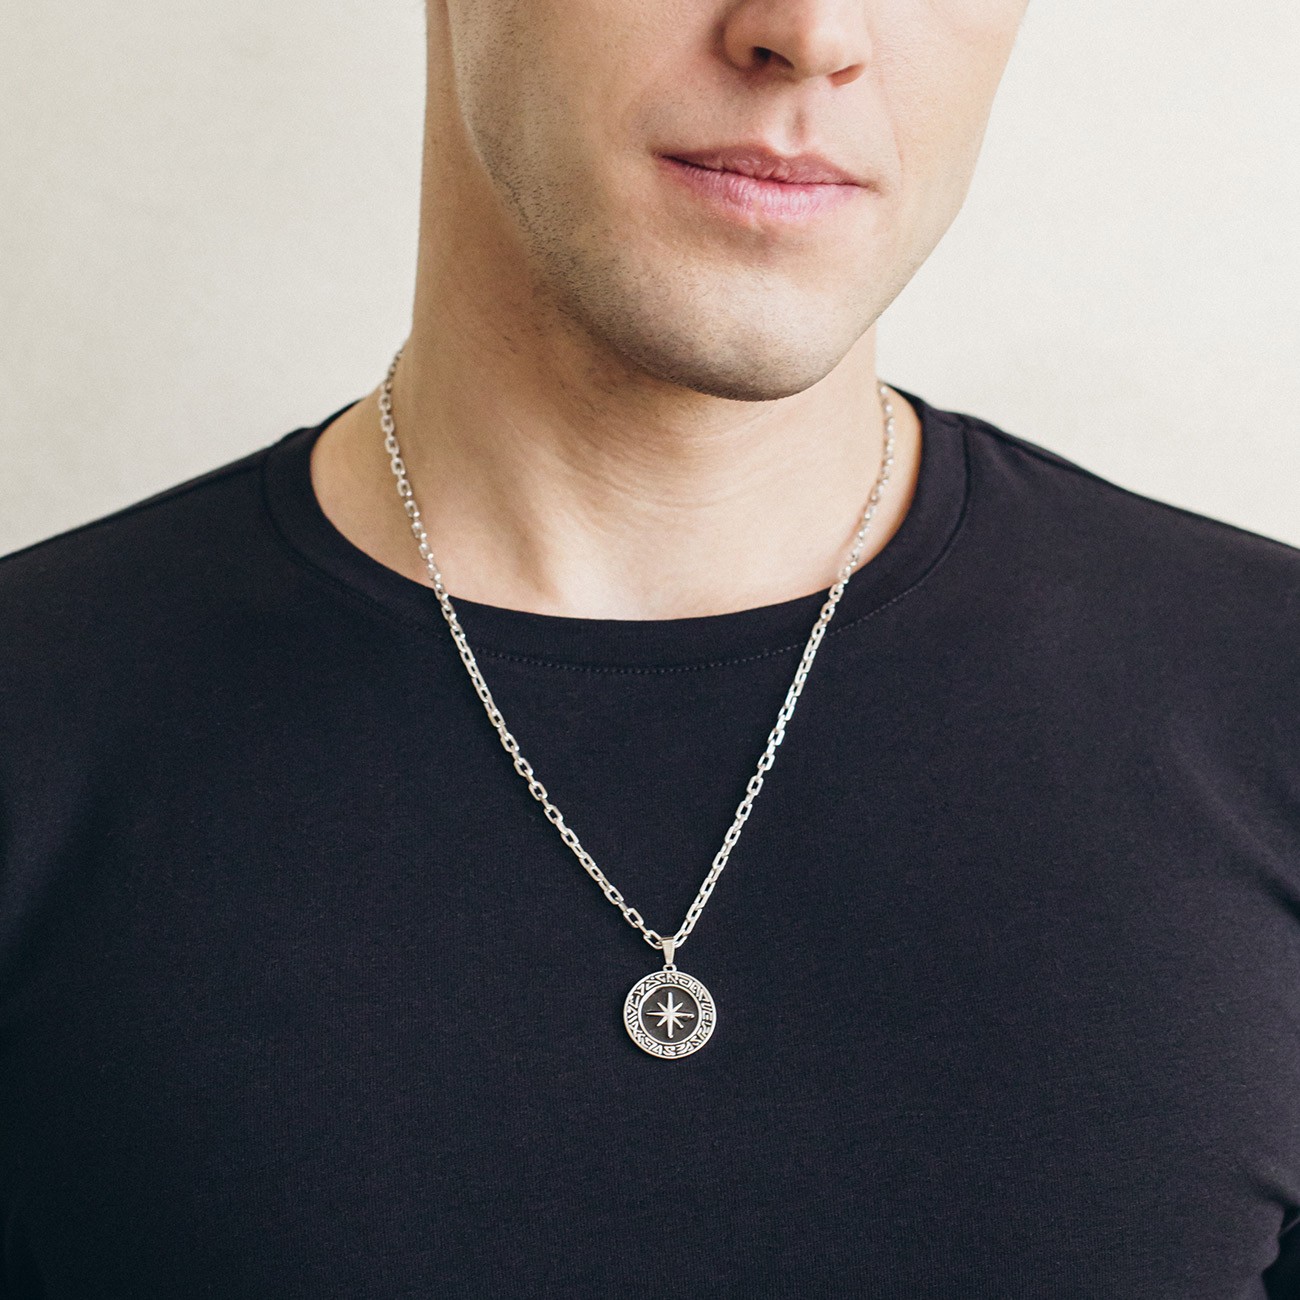 Men's compass necklace, silver 925